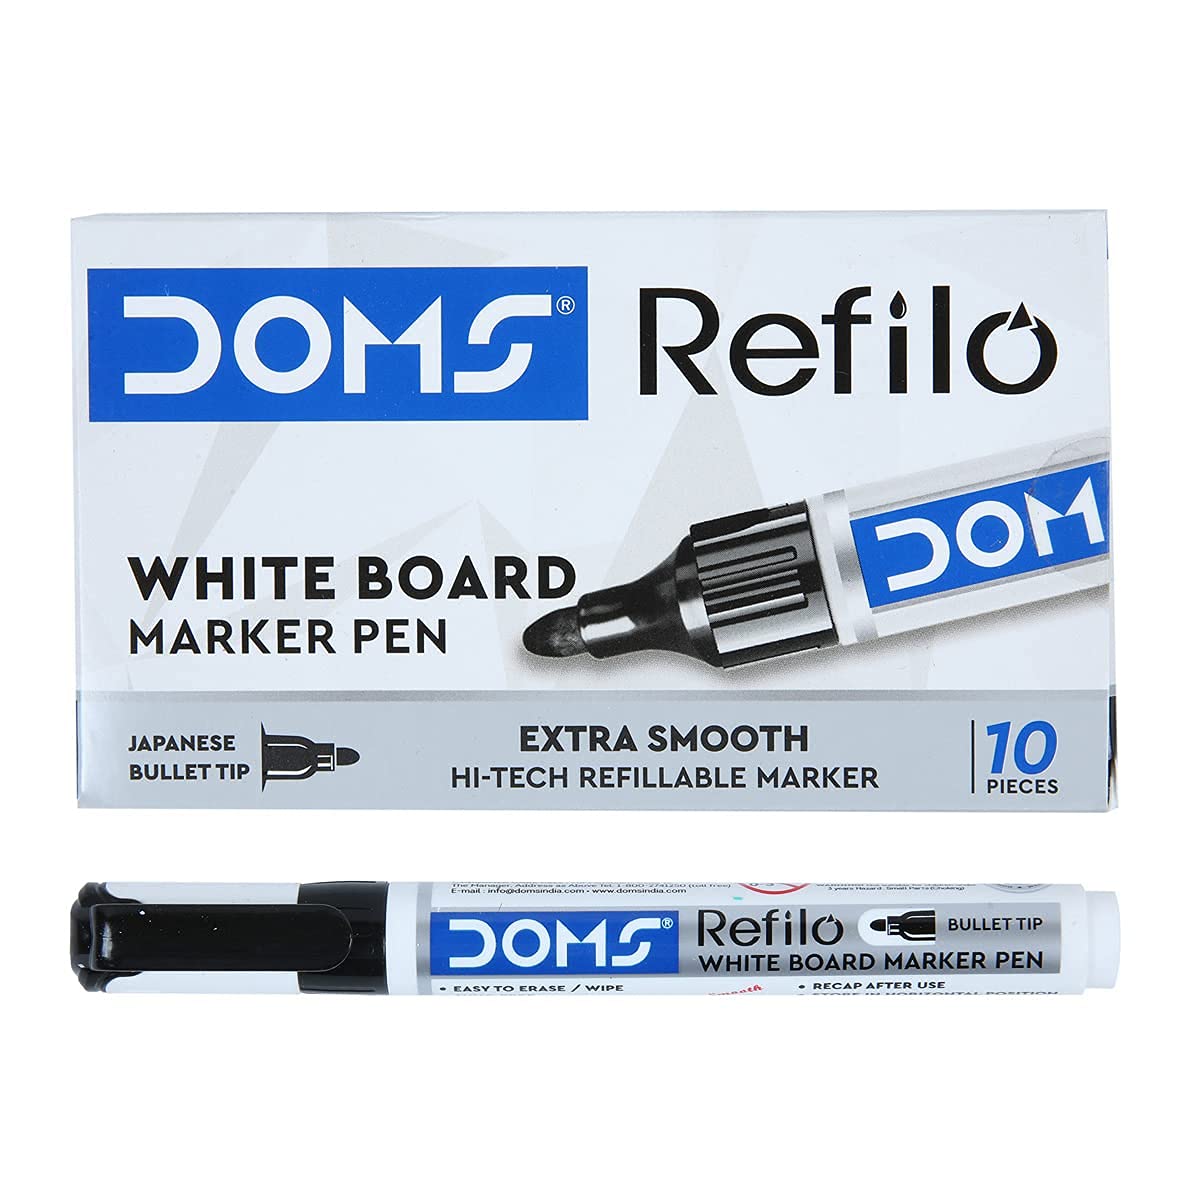 Doms white Board Marker pen Black